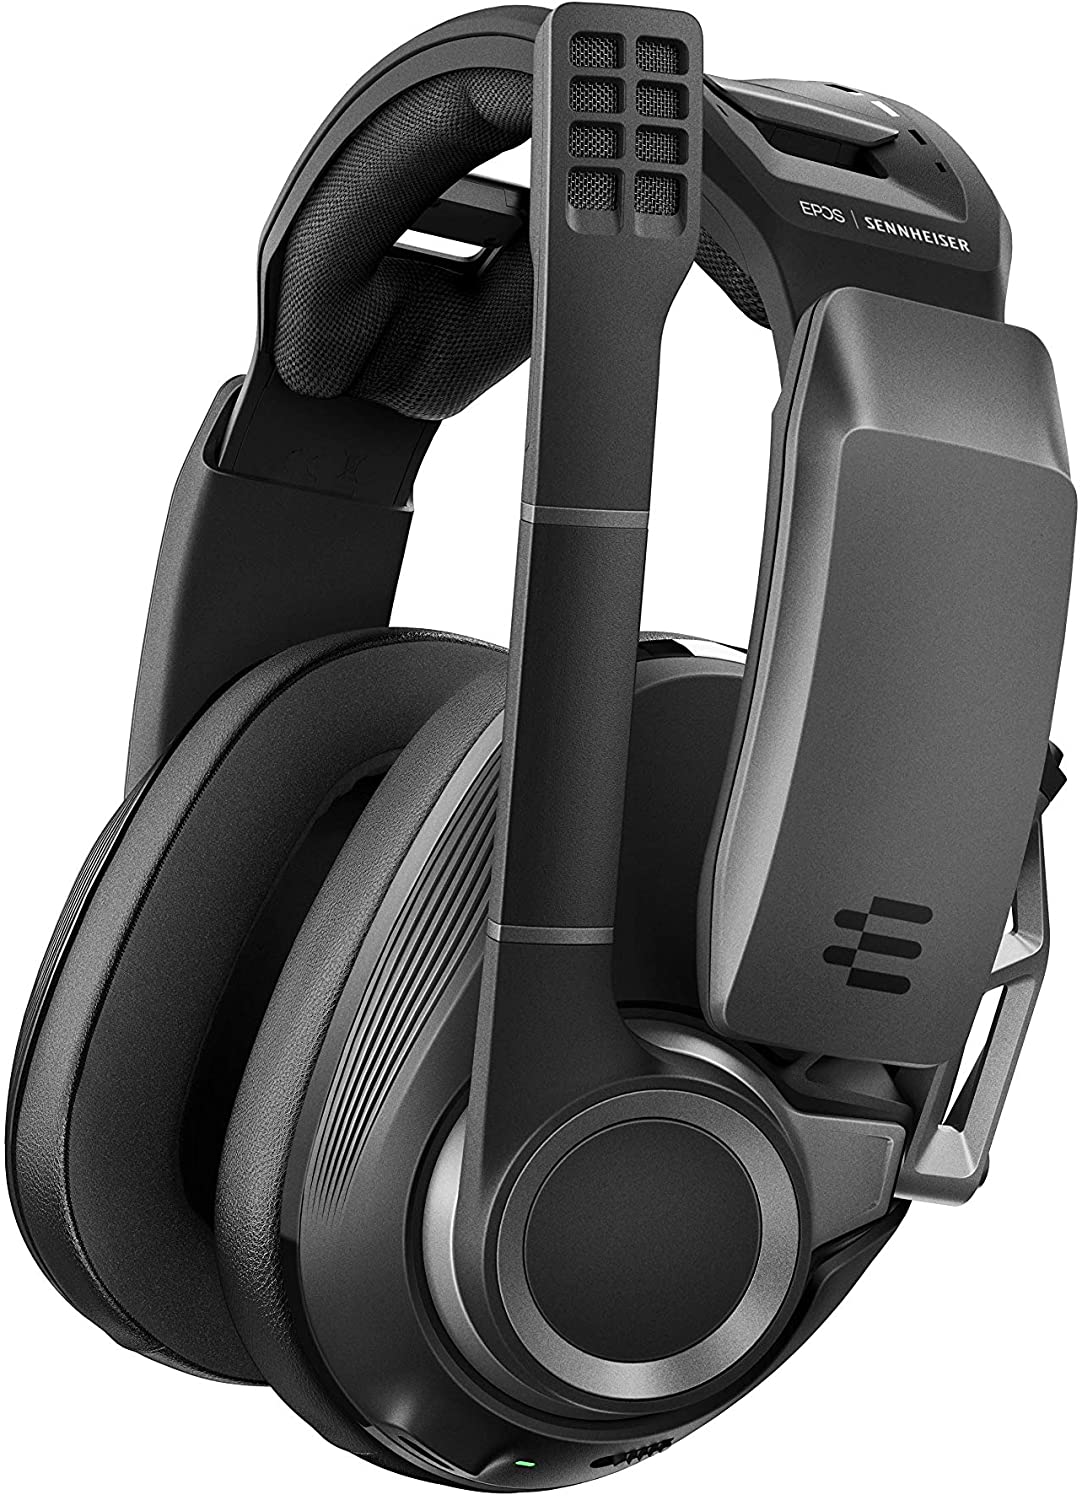 epos-senneiser-gsp-670-bluetooth-gaming-headset-black-5